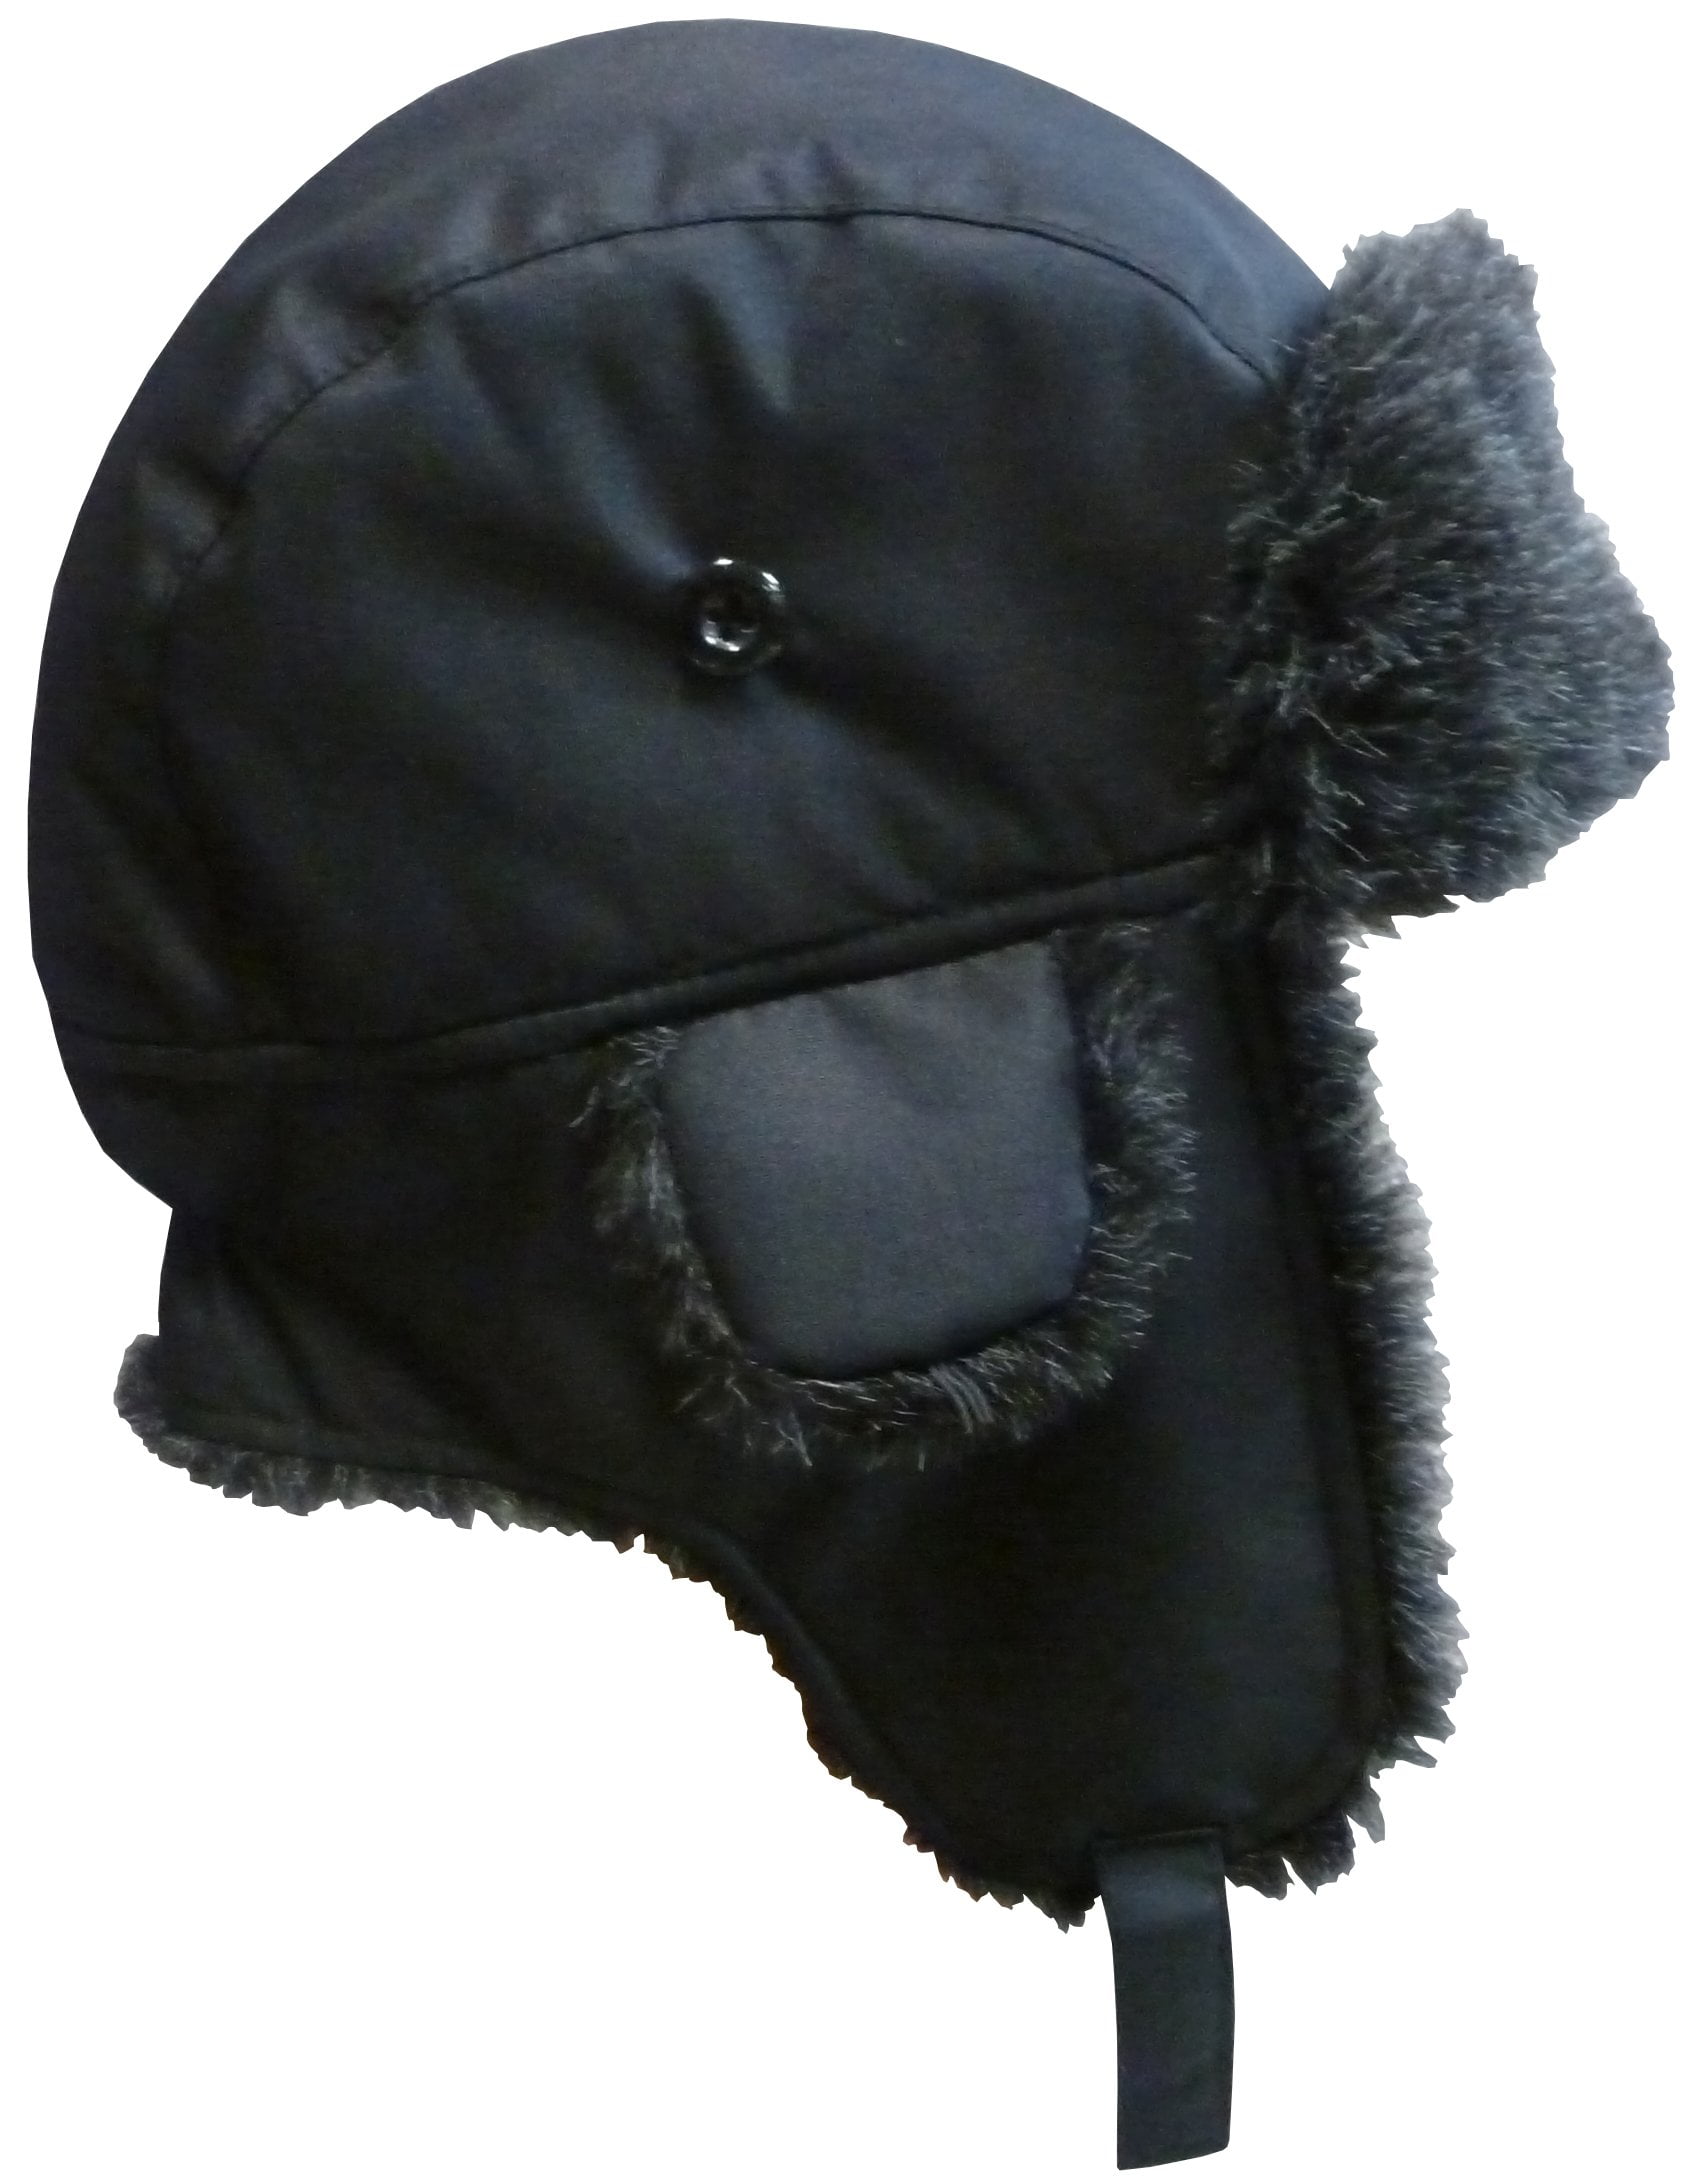 Eskimo® Black Ice POM Hat, Headwear, Unisex, Black, 37383